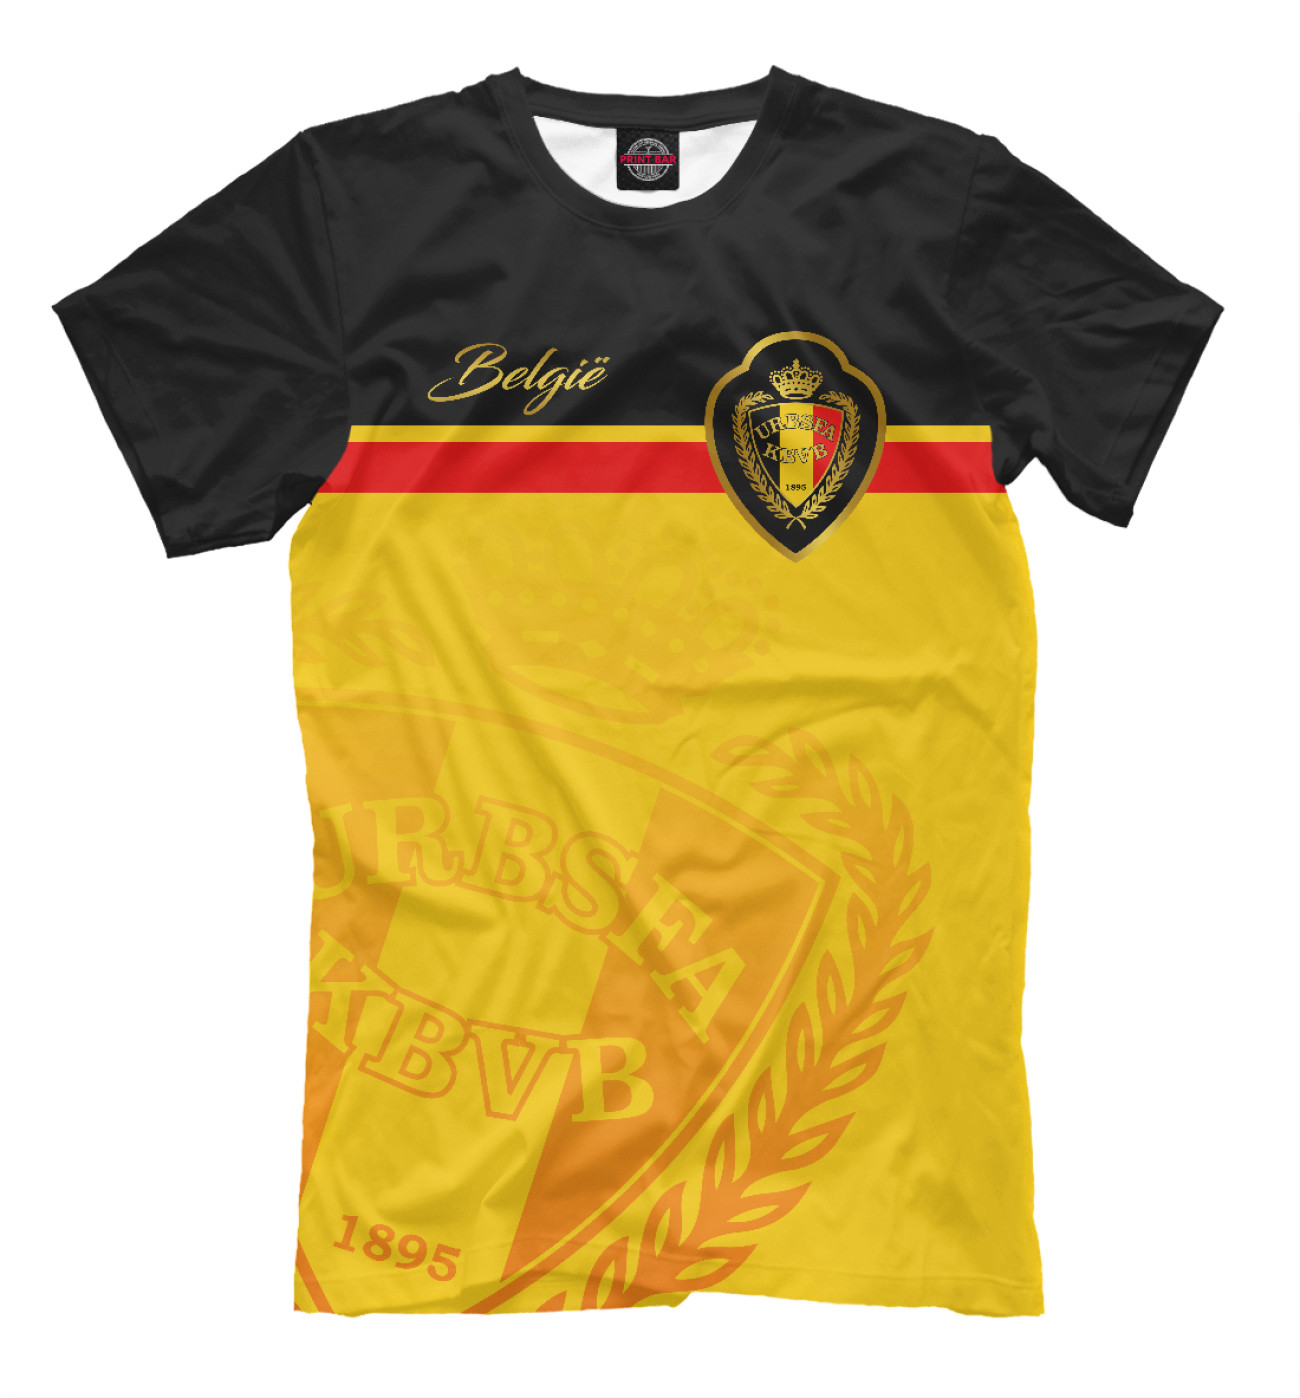 Мужская Футболка Бельгия, артикул: FNS-463481-fut-2